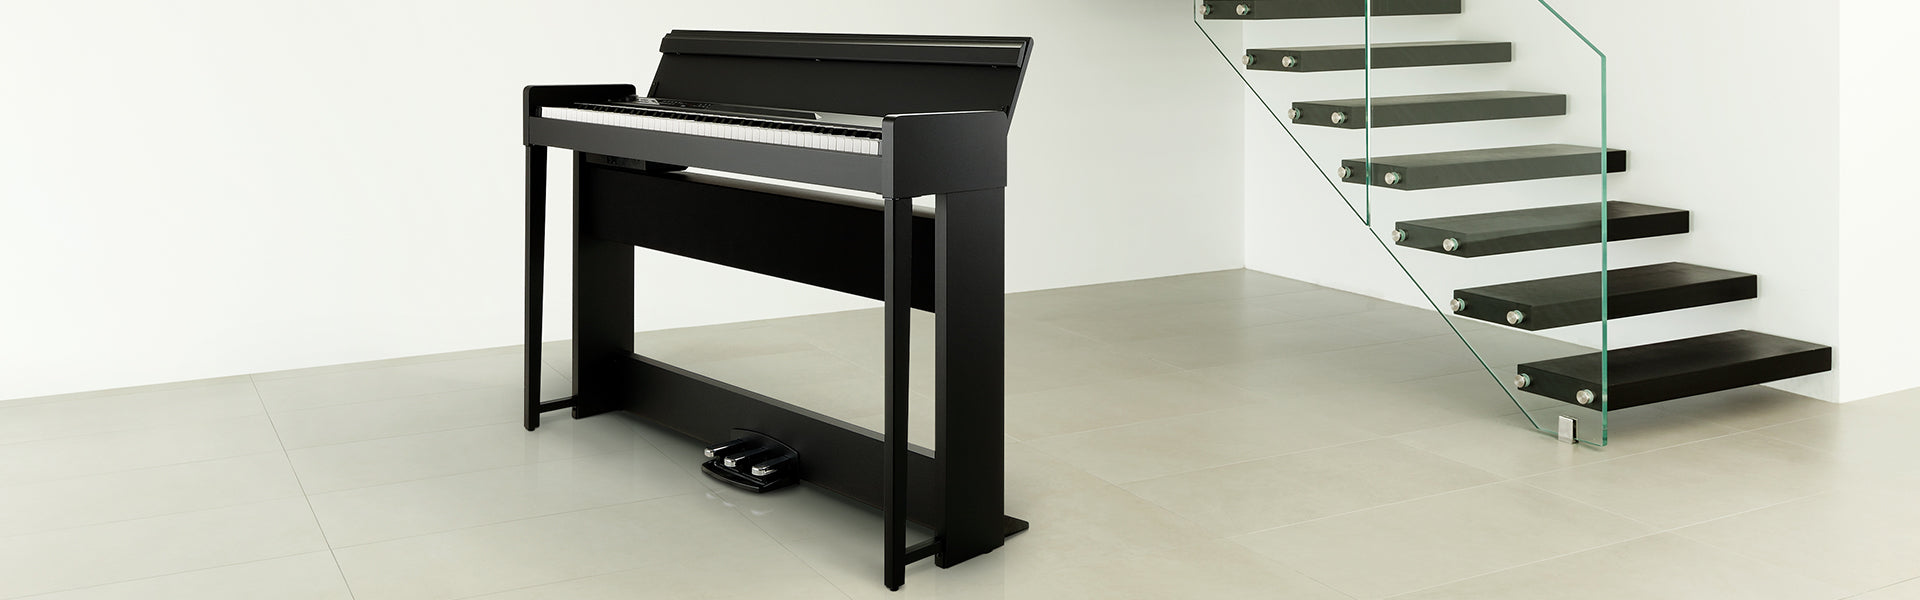 KORG C1 digital piano